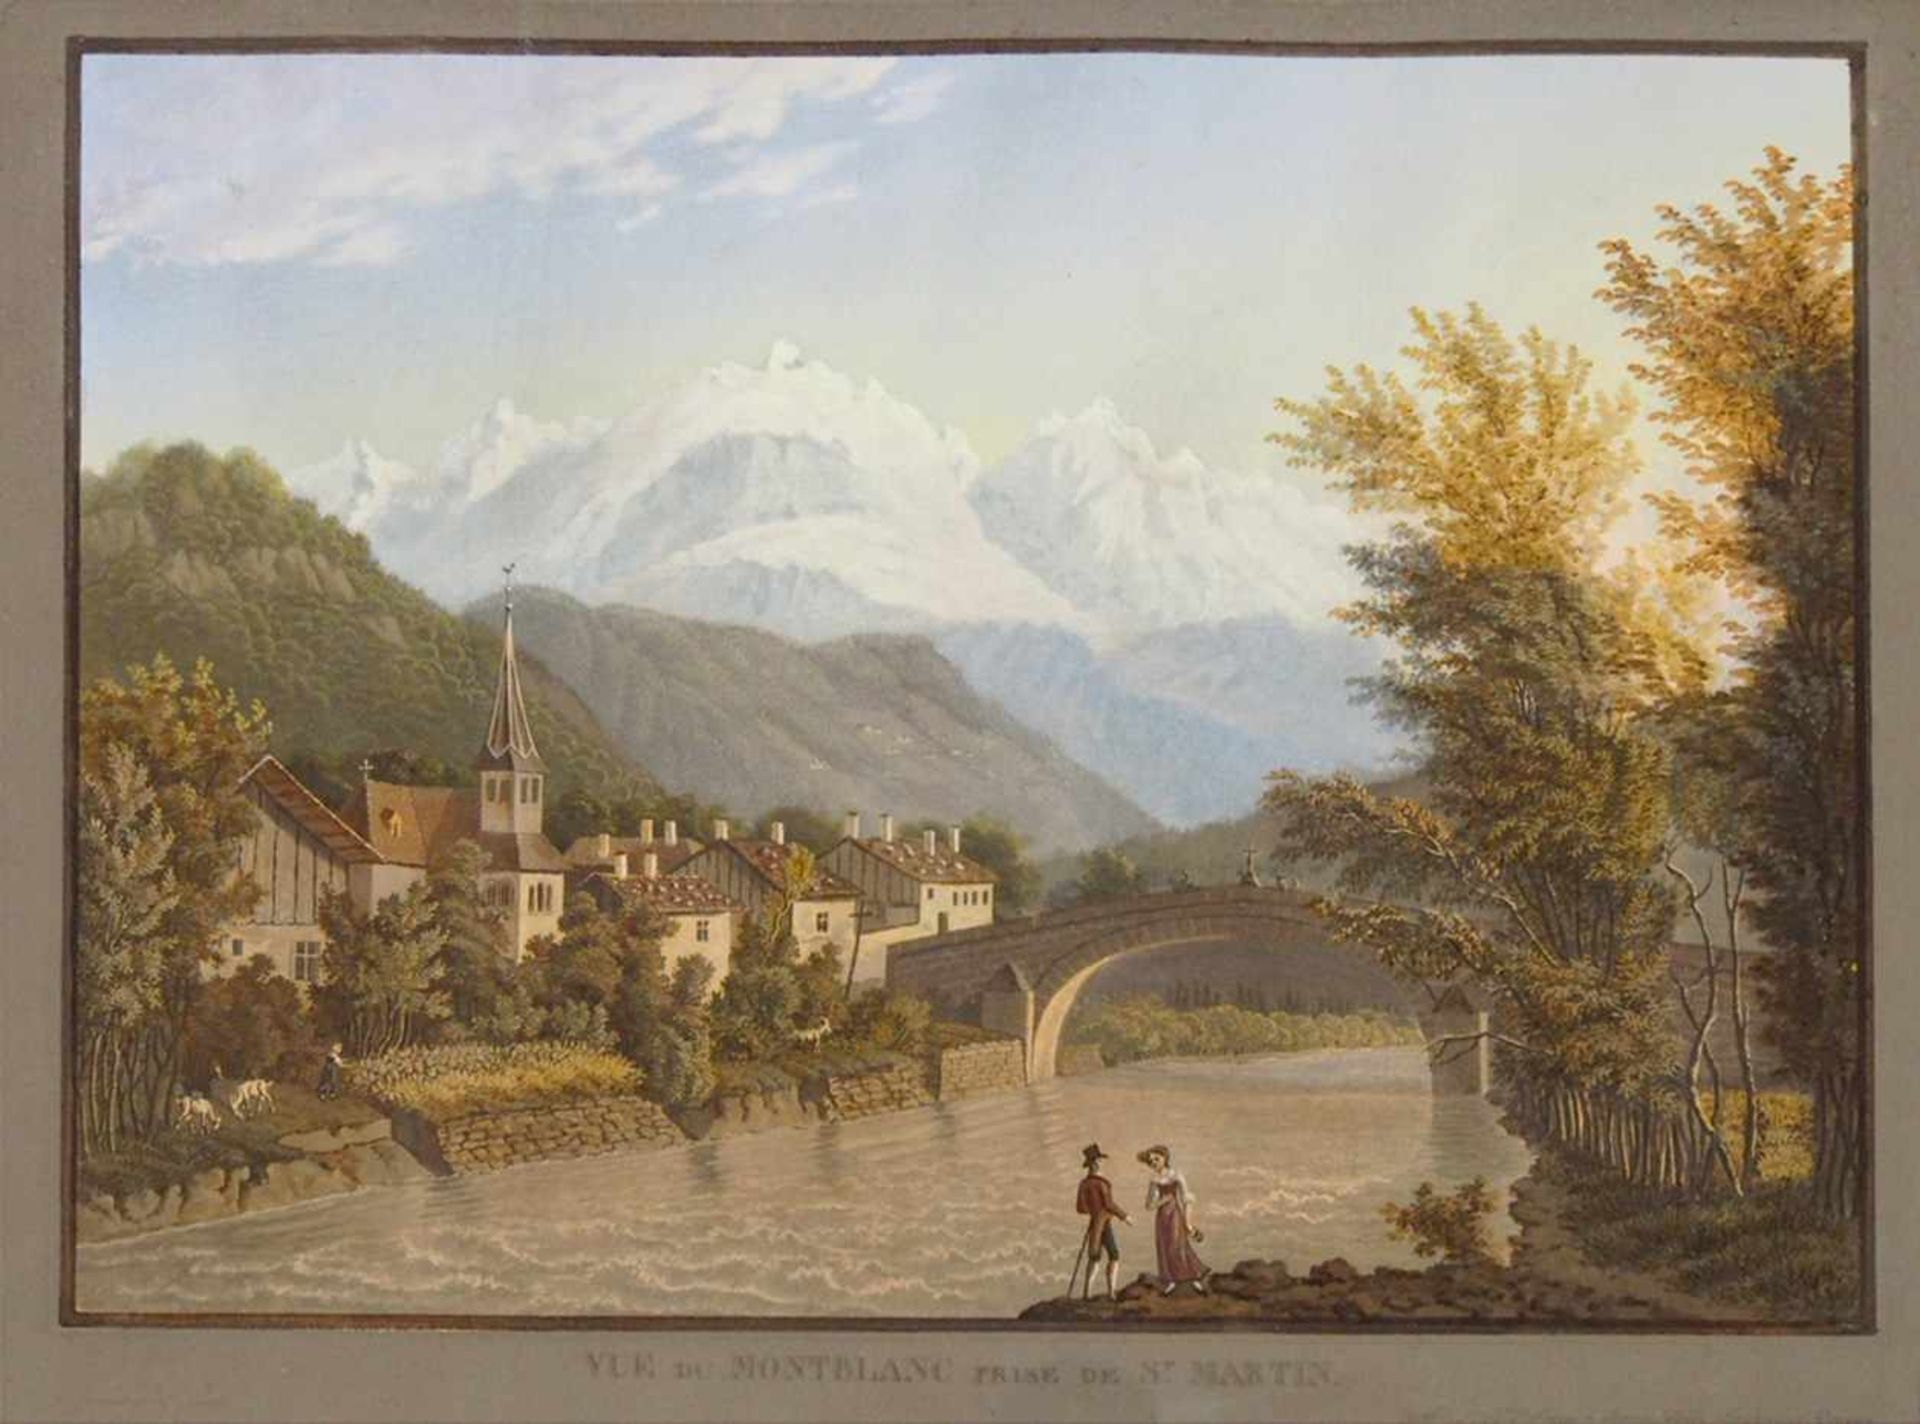 Vue du Montblanc prise de St. MartinAquatinta, handgouachiert von J.P. Lory, Bern, um 1824, 29 x